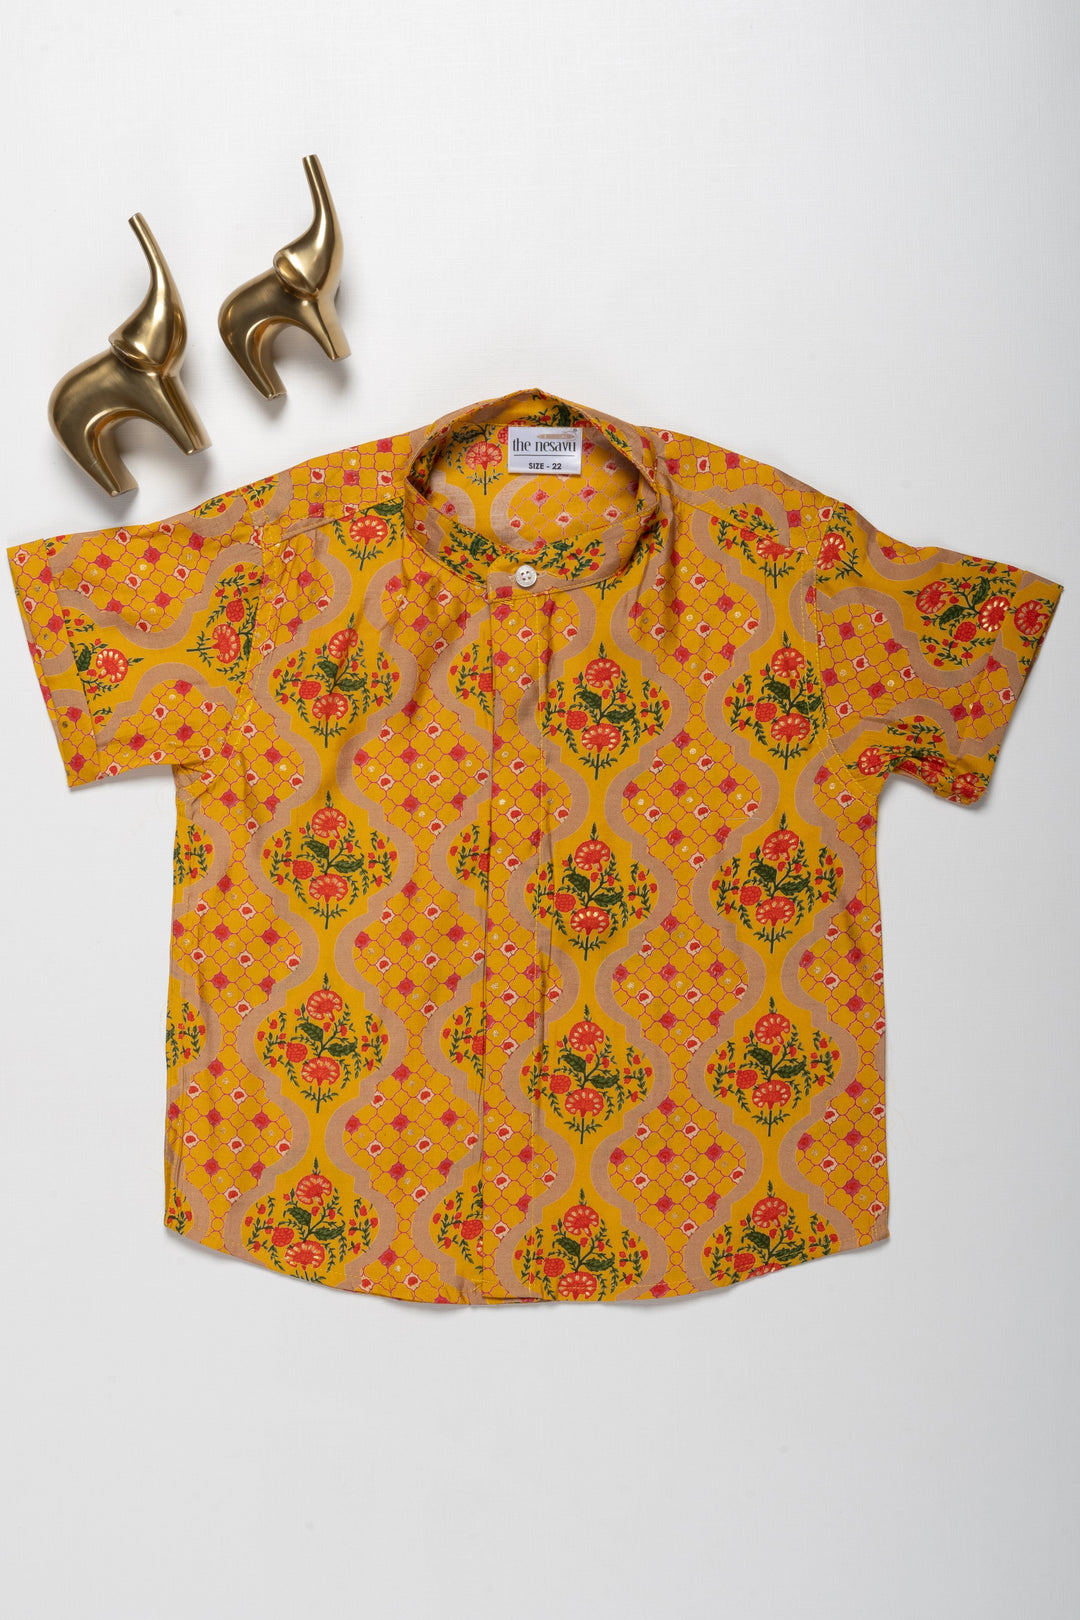 The Nesavu Boys Cotton Shirt Bright Yellow Boys Chanderi Shirt with Traditional Floral Print Nesavu 16 (1Y) / Yellow / Chanderi BS157B-16 Bright Yellow Boys Chanderi Shirt with Traditional Floral Print | Festive Wear | The Nesavu